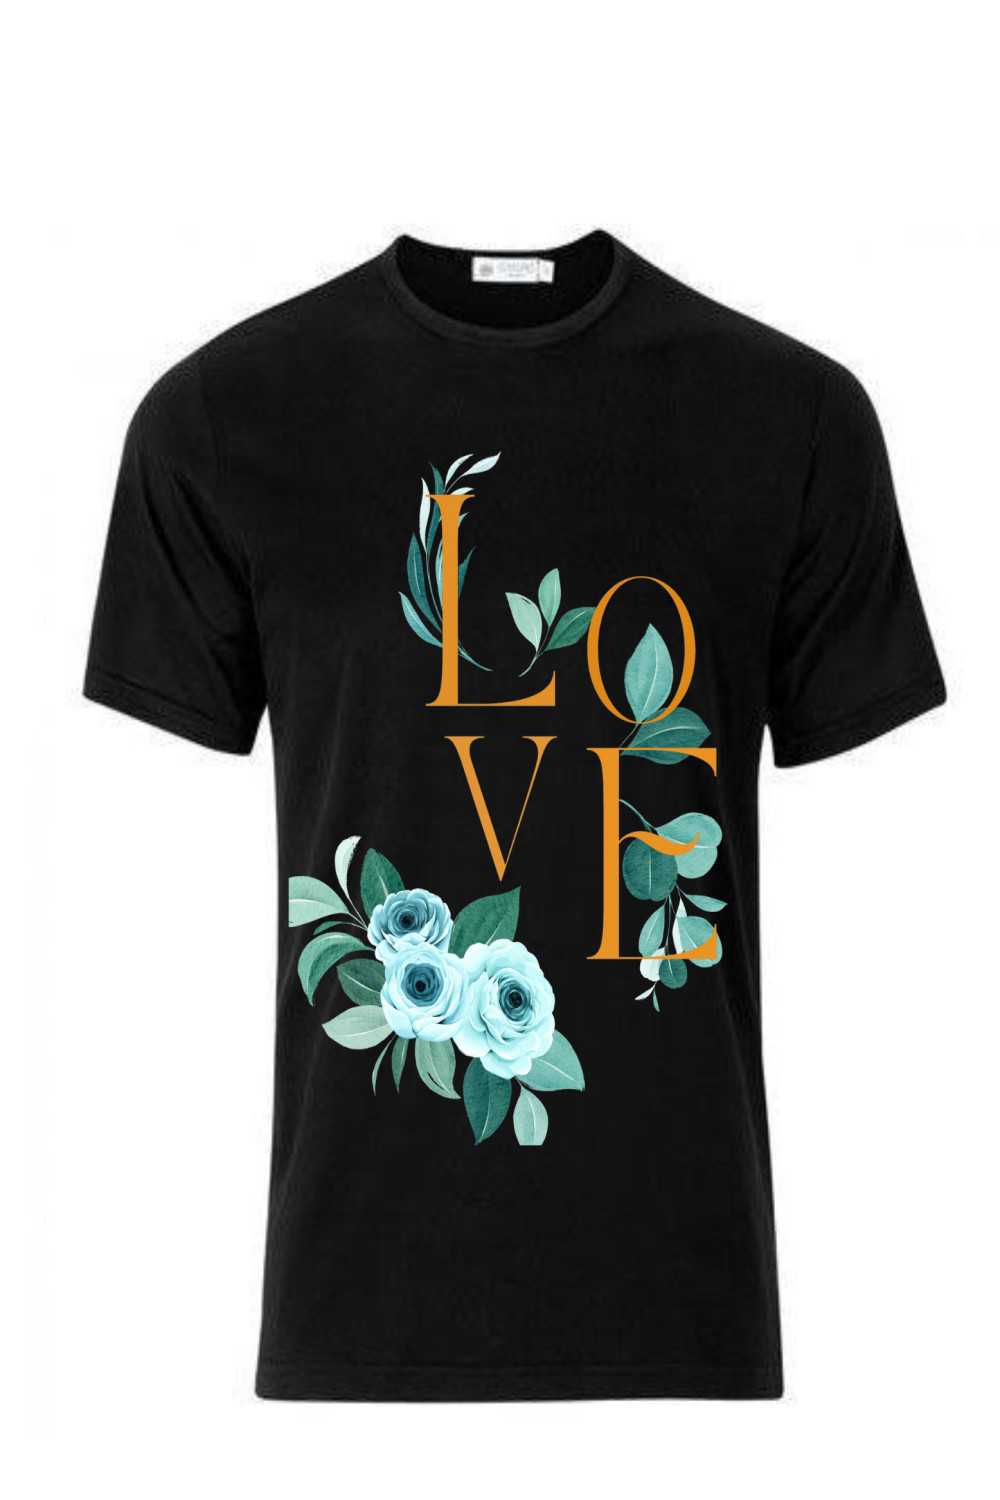 Beautiful Love Flowers T-shirt Design Png Printeble pinterest preview image.